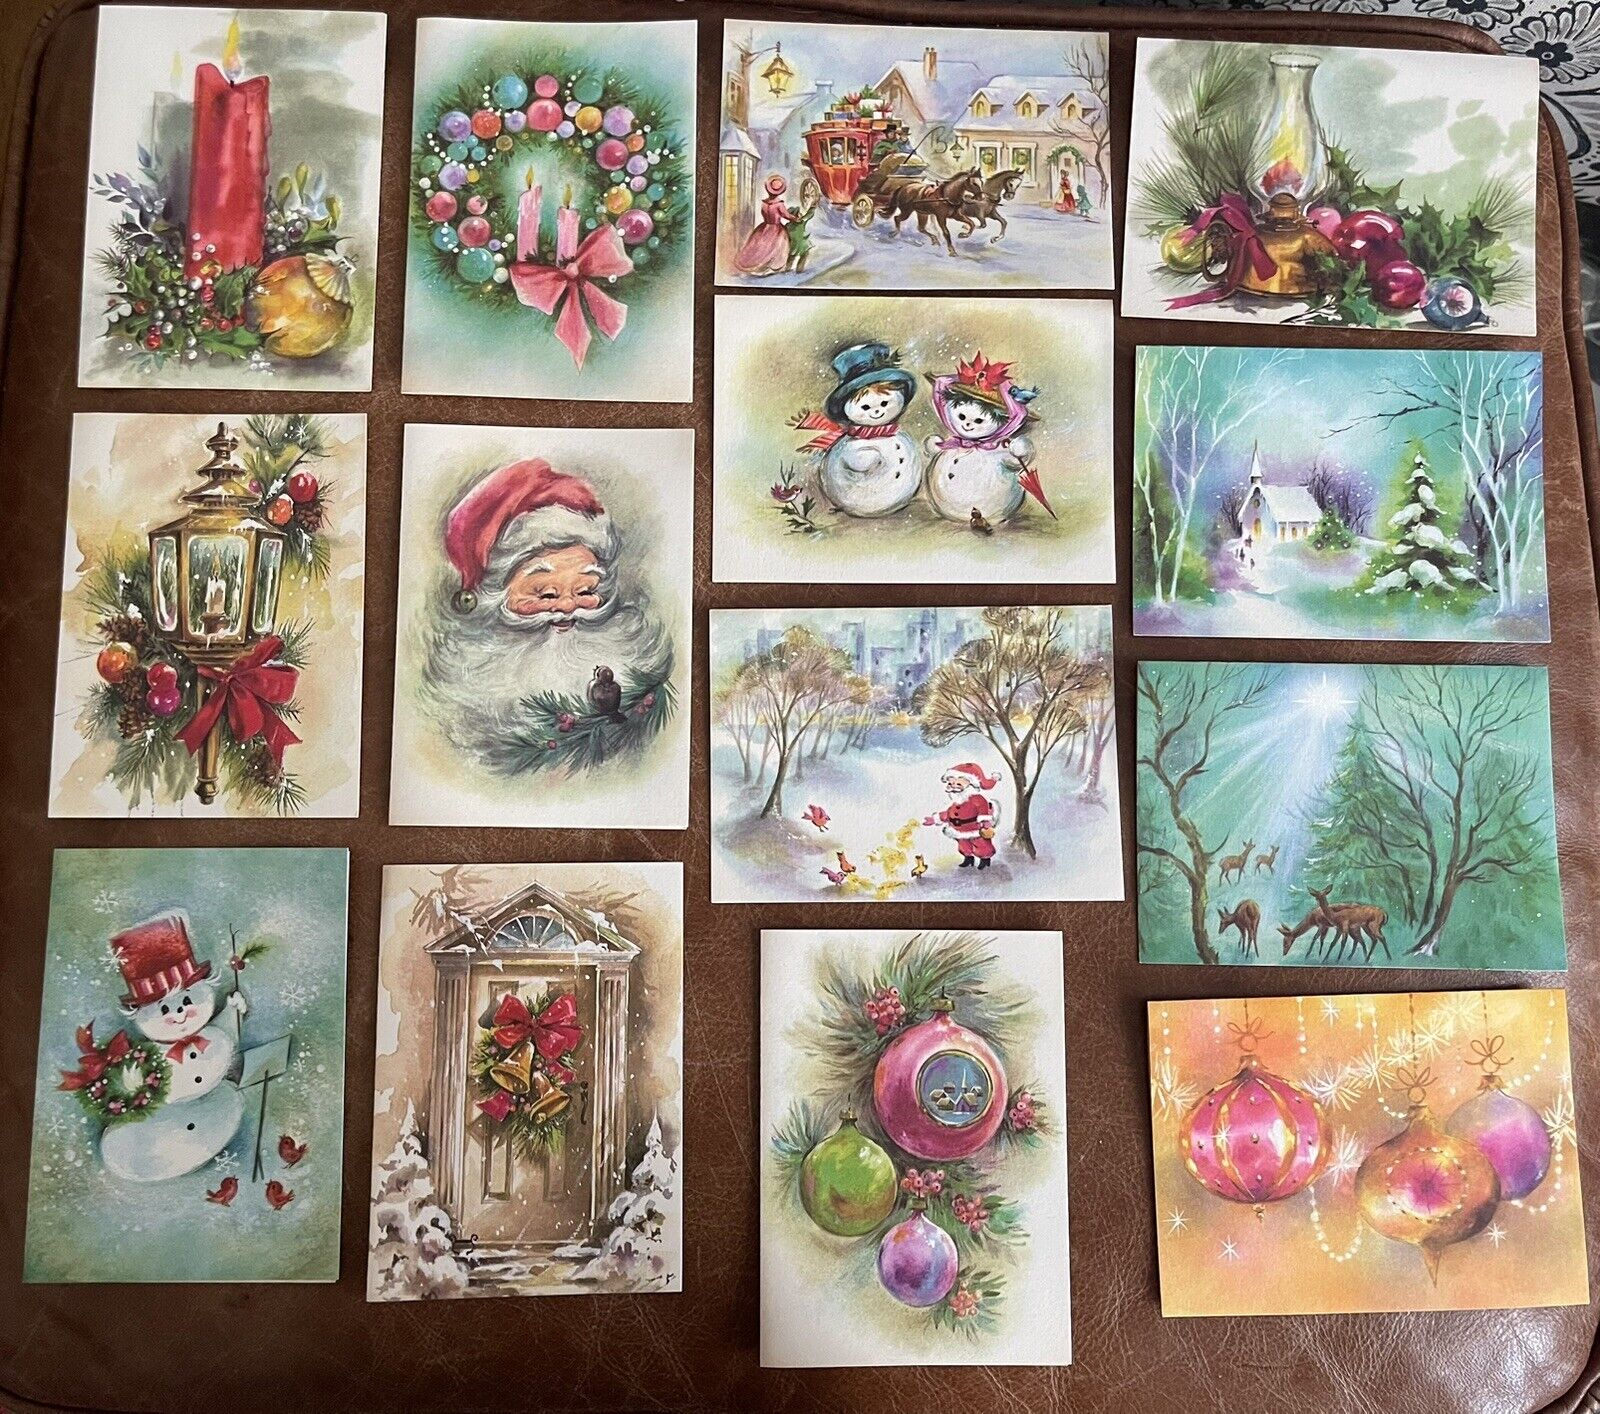 32 VTG Unused Christmas Greeting Cards w/ Envelopes Santa Snowman Ornaments